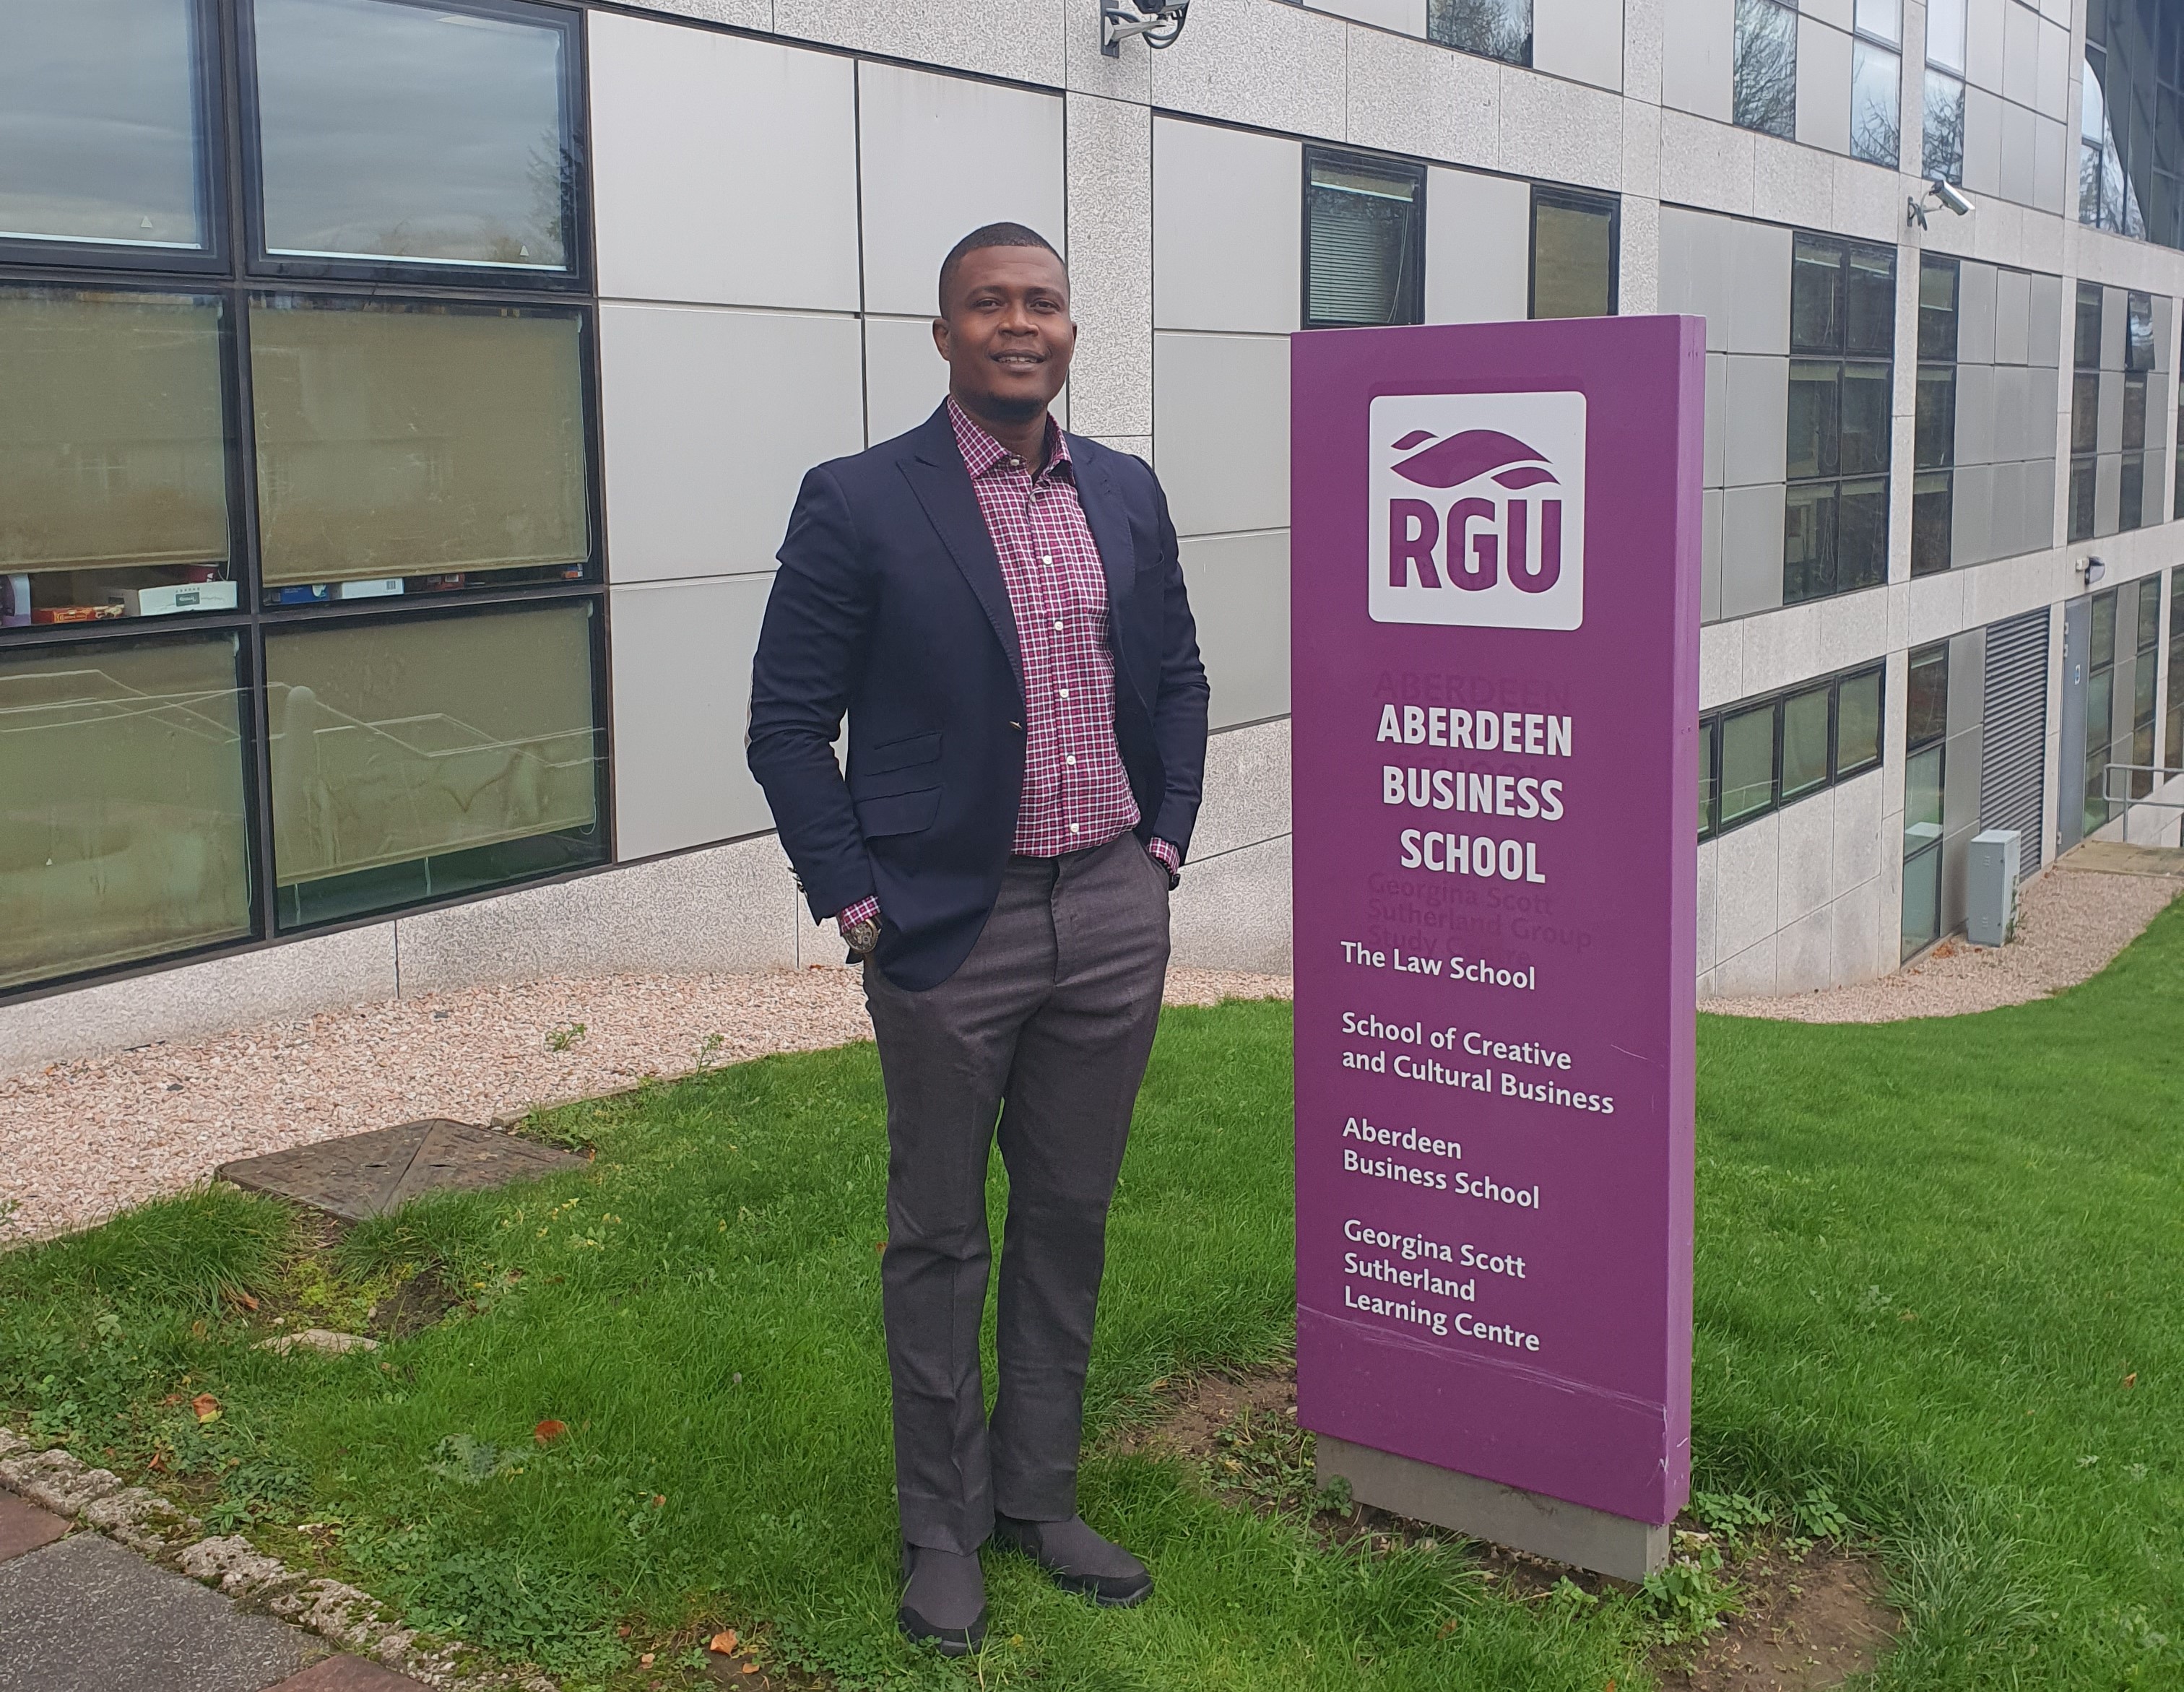 Studying MSc Business Innovation and Entrepreneurship at RGU